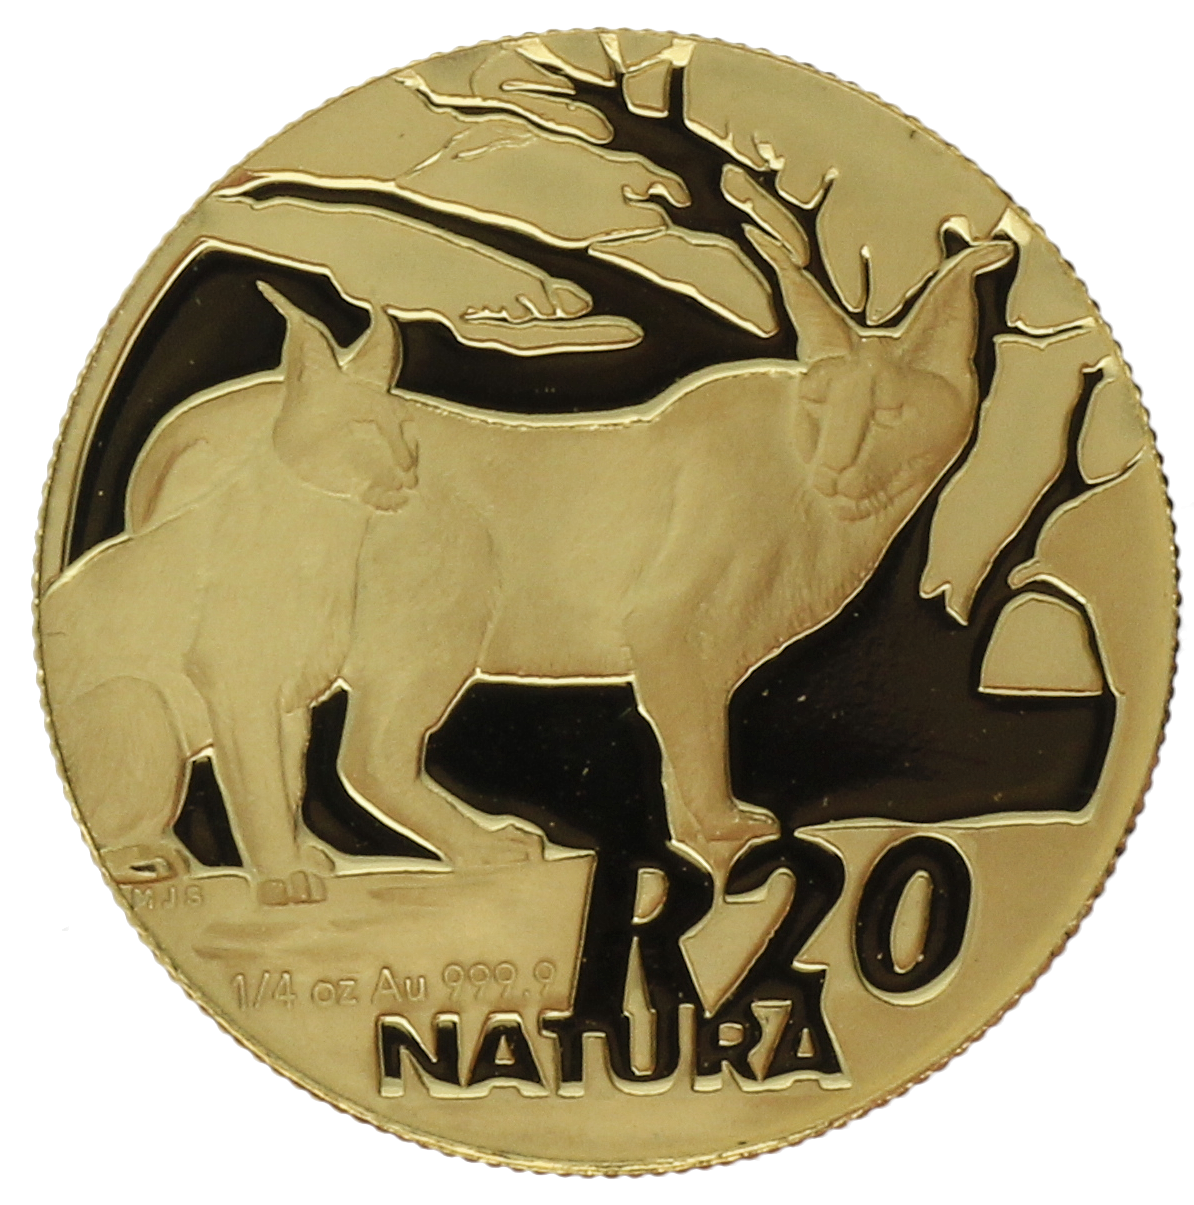 South Africa - 20 rand - 2004 - Natura series - 1/4oz